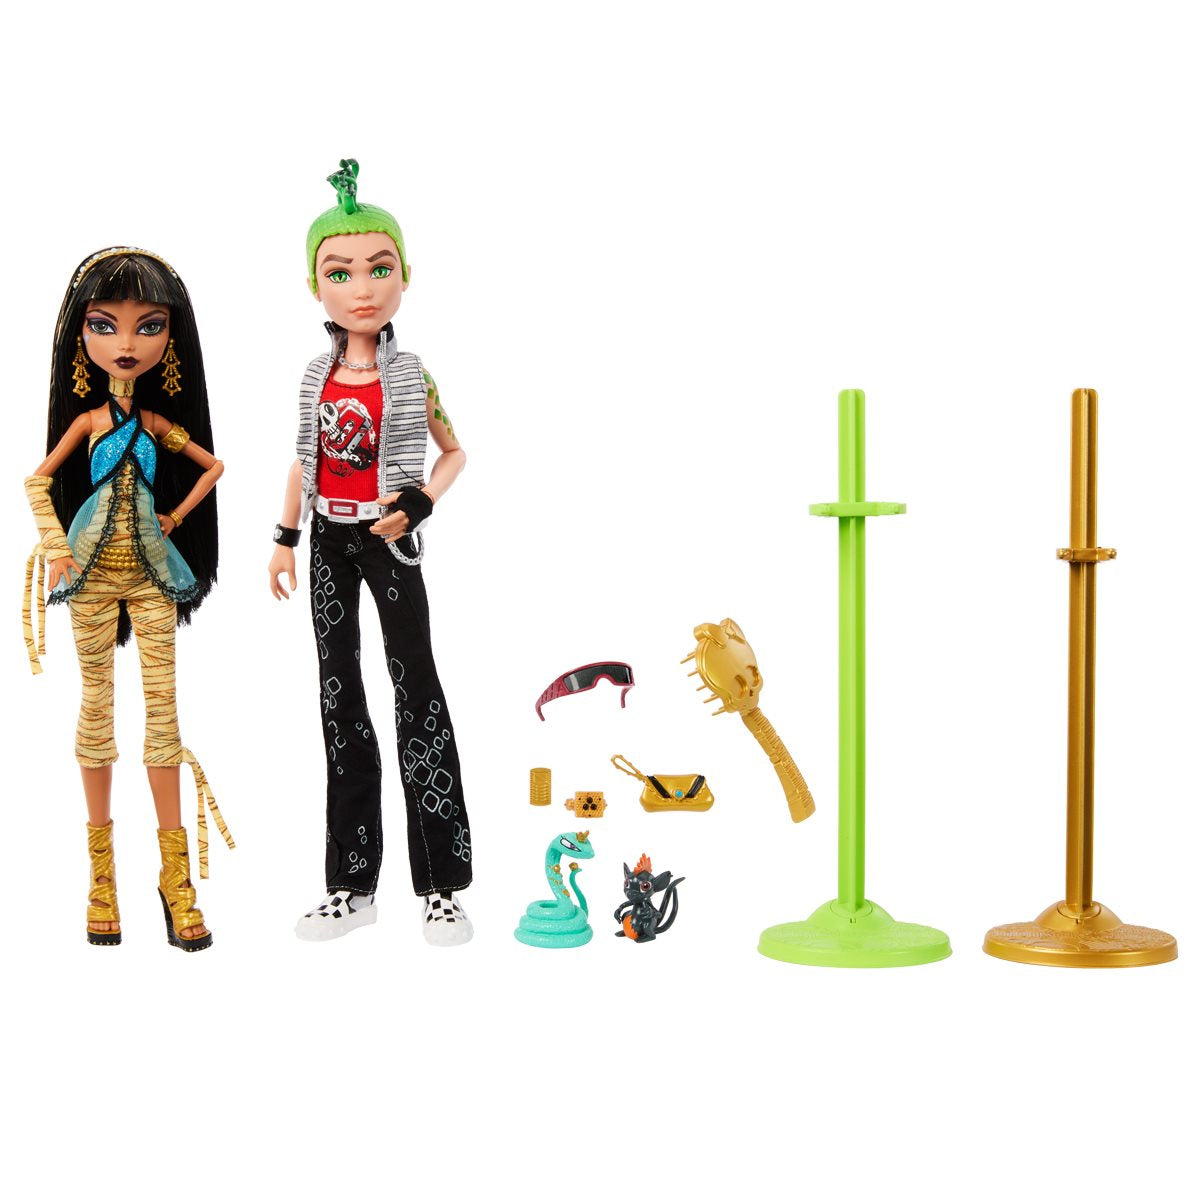 Booriginal Creeproduction Cleo De Nile and Deuce Gorgon Collectible Doll Set